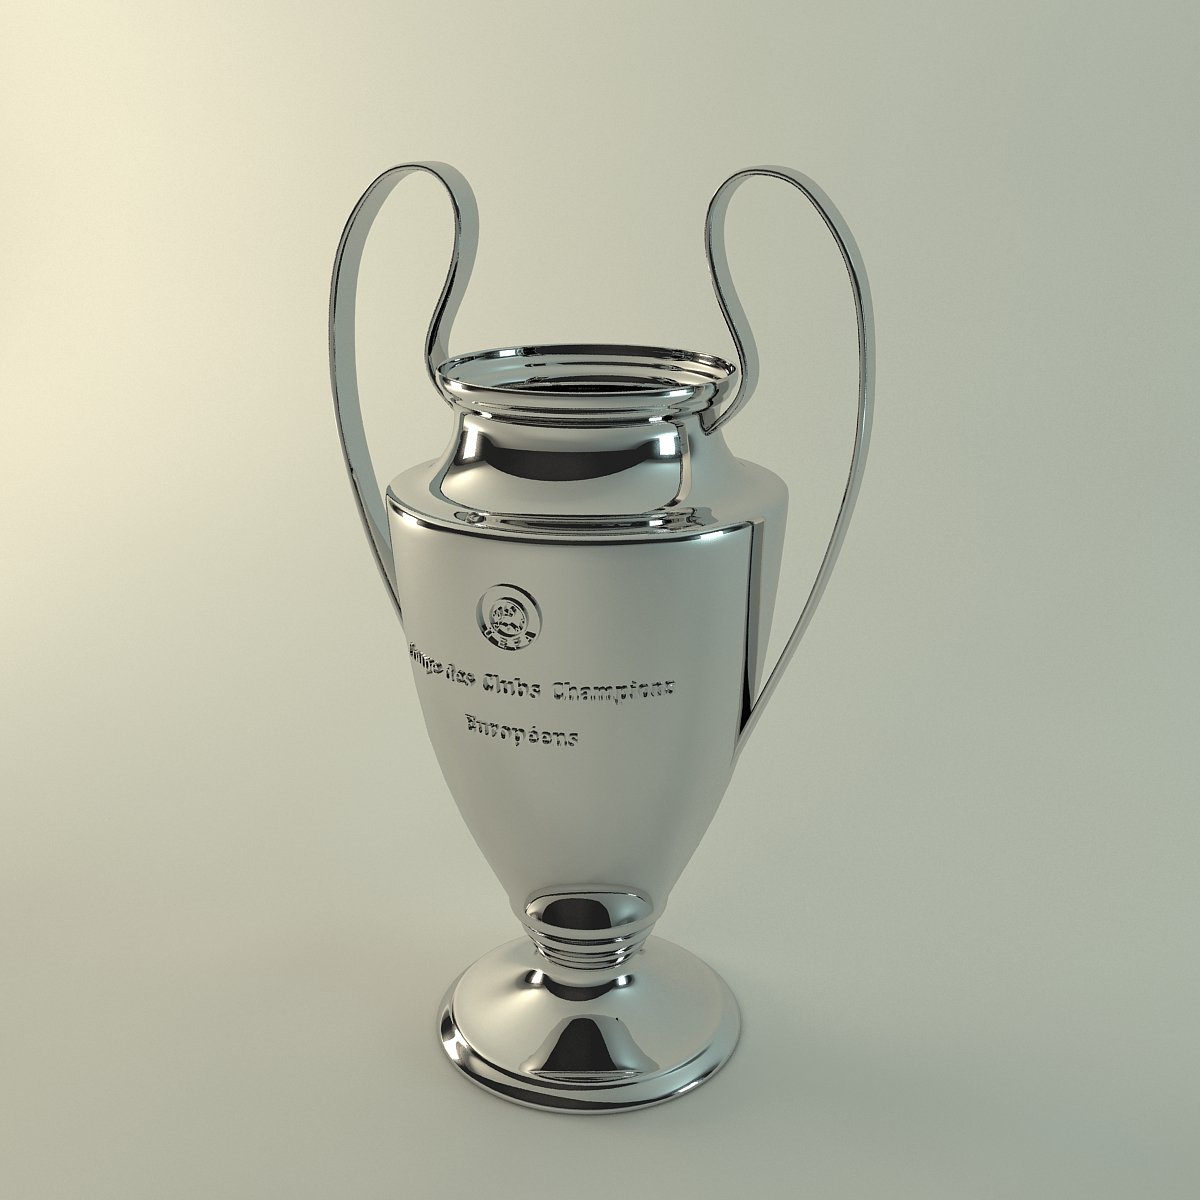 European Champions League Cup 3d Model In Awards 3dexport